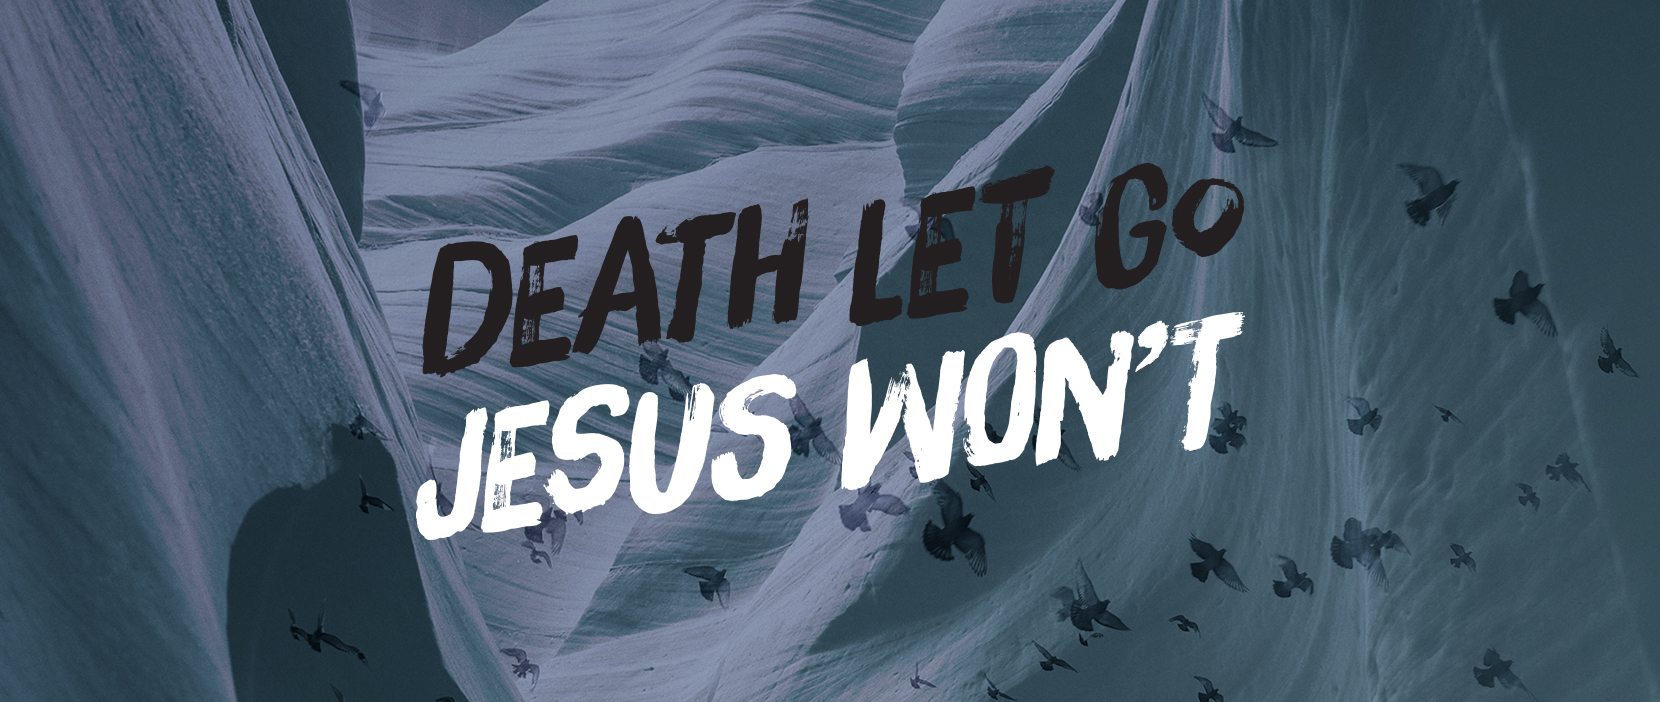 Image for Death Let Go…Jesus Won’t